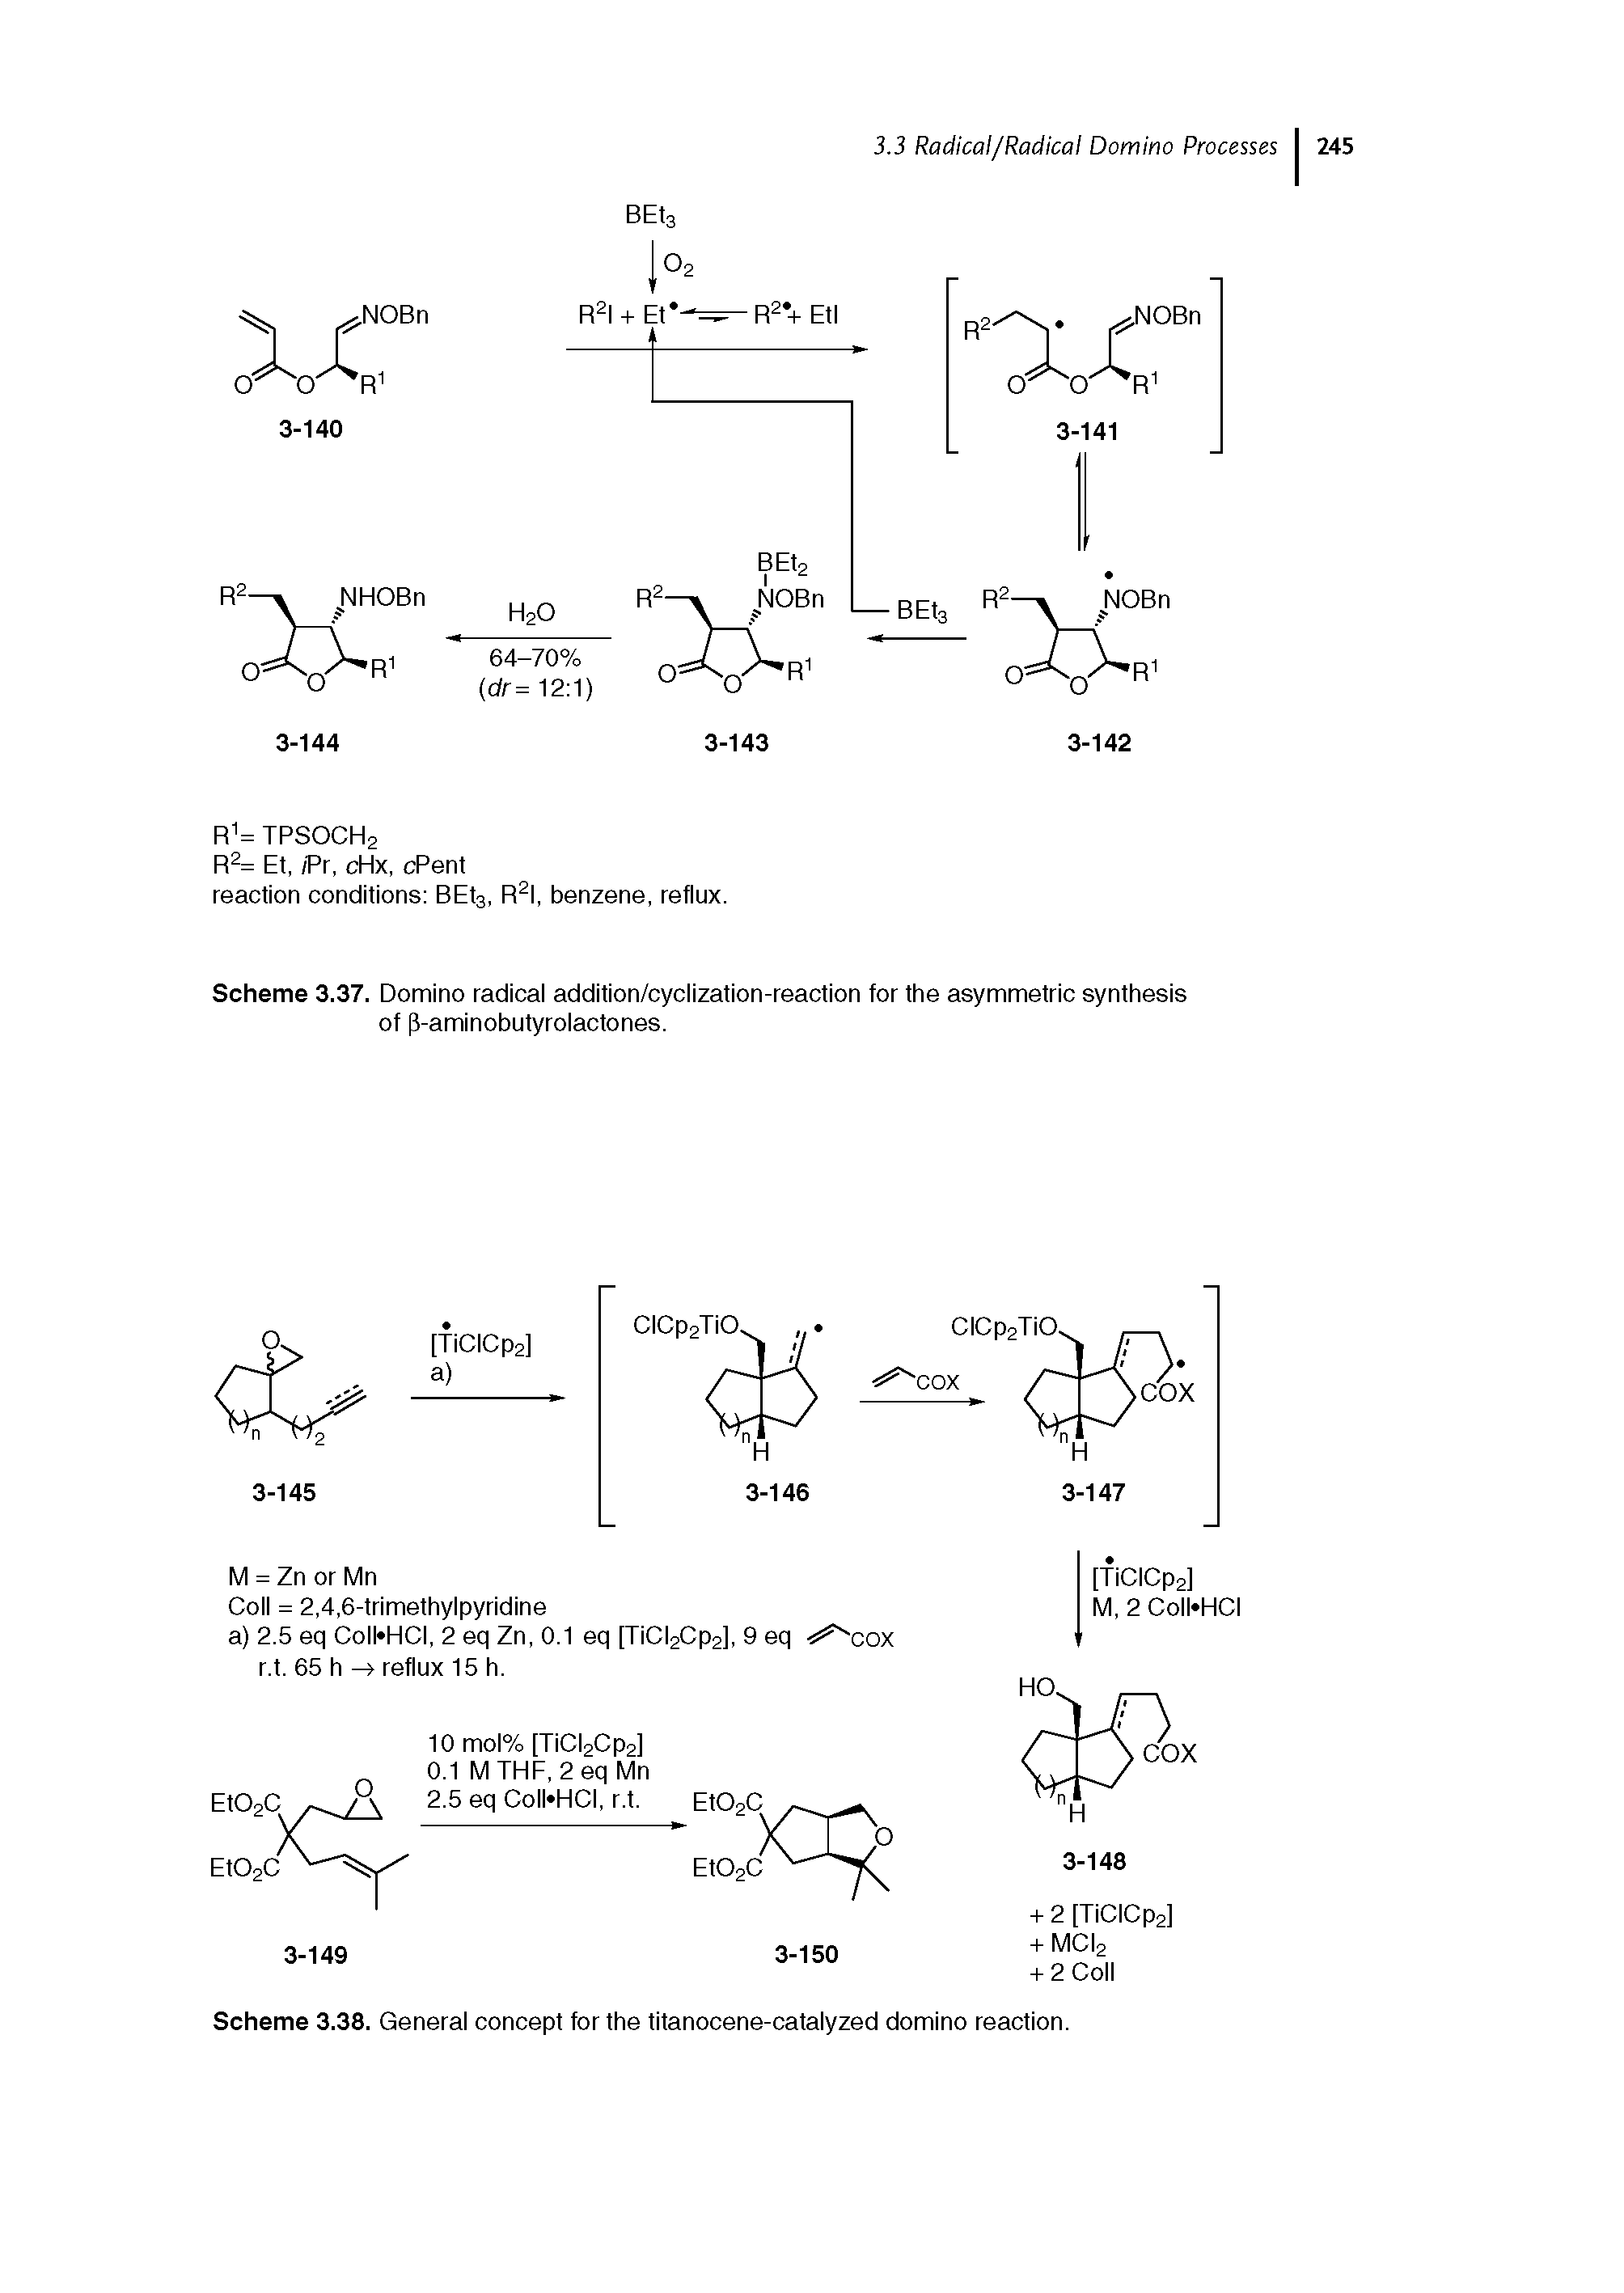 Scheme 3.38. General concept for the titanocene-catalyzed domino reaction.